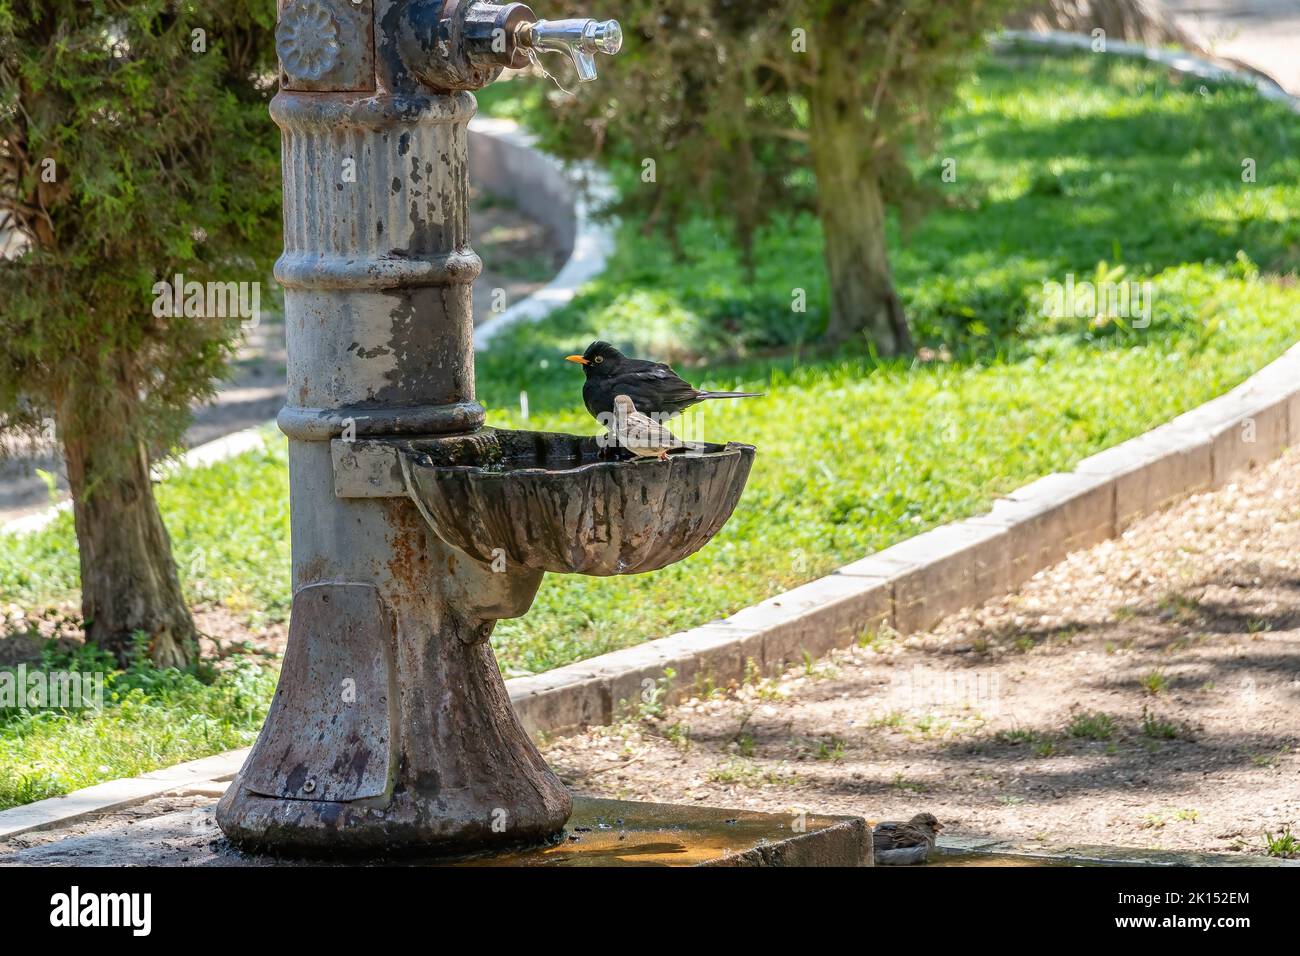 Male blackbird (Turdus merula) bathing and drinking in a public fountain Stock Photo